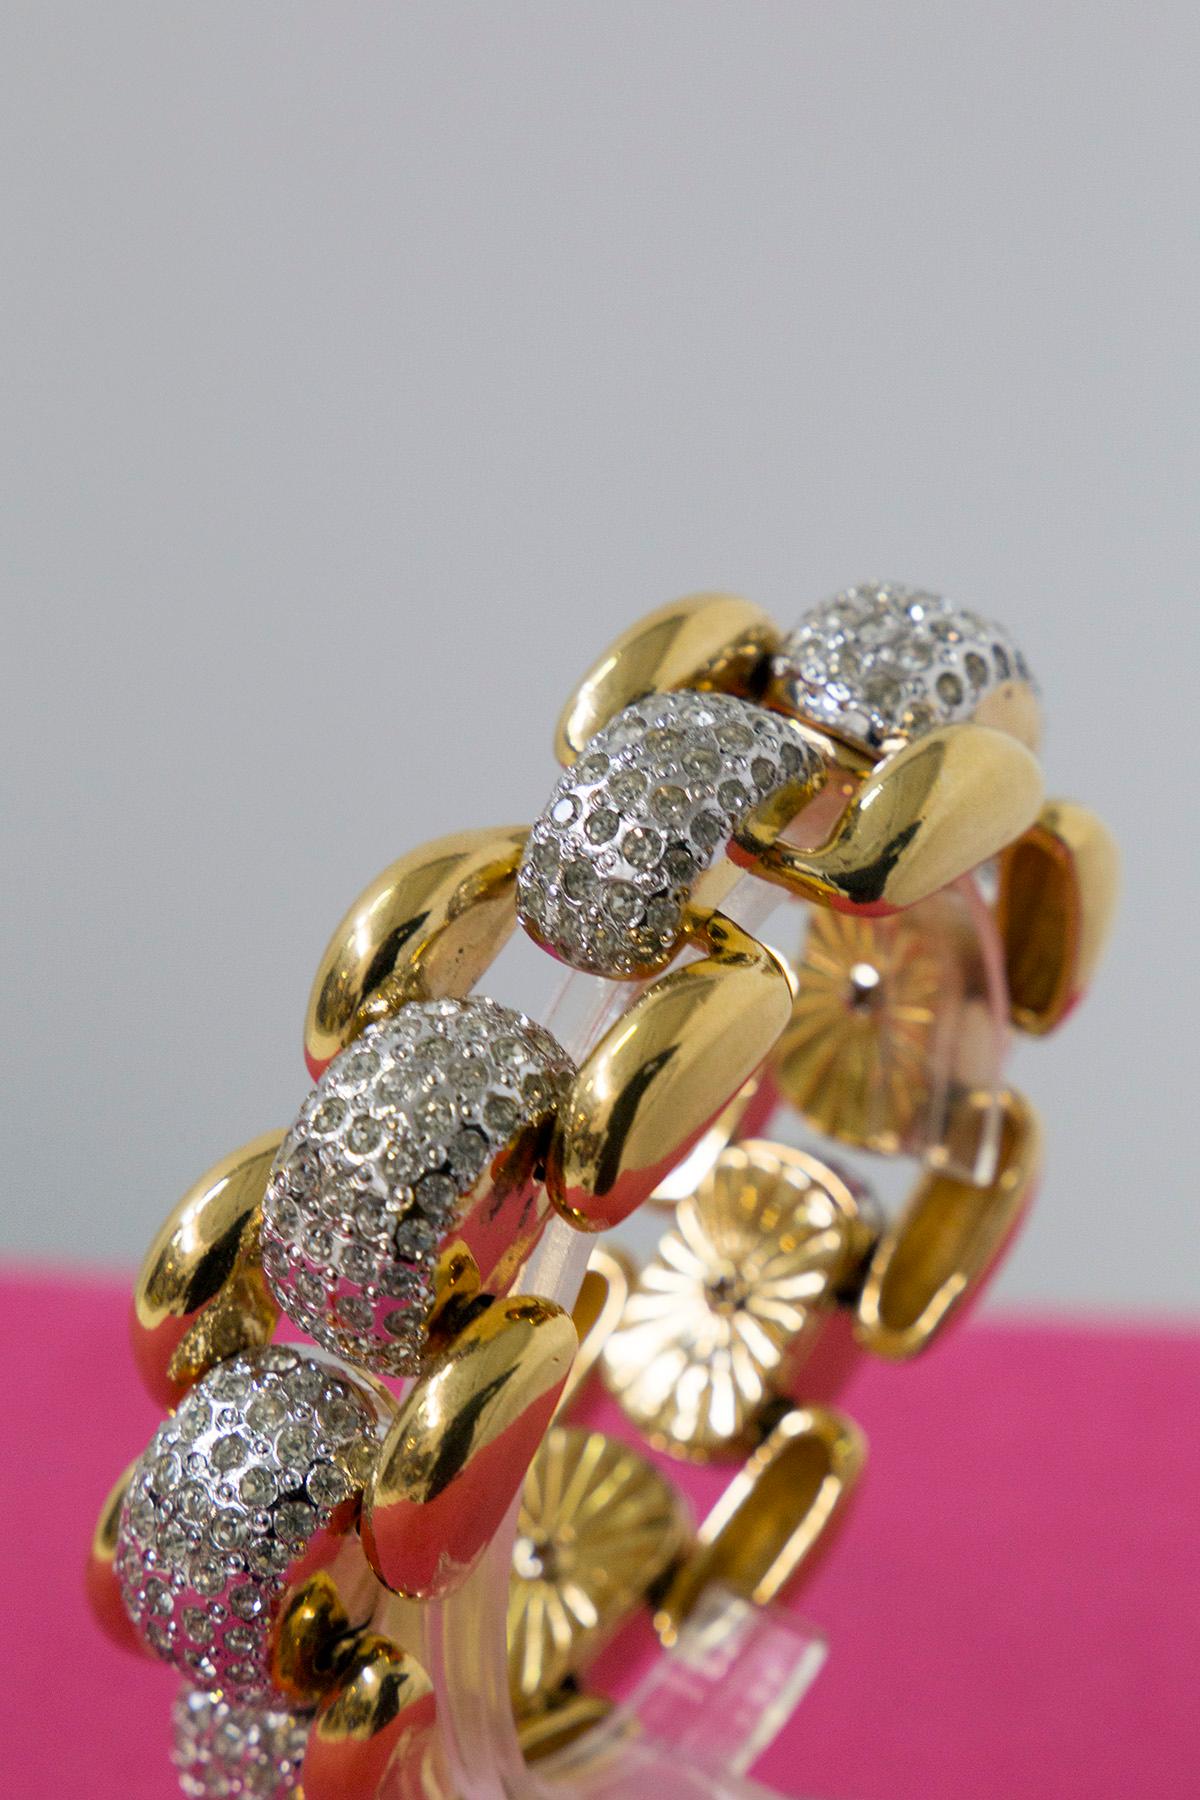 Vintage Yves Saint Laurent bracelet in gold-plated metal 1